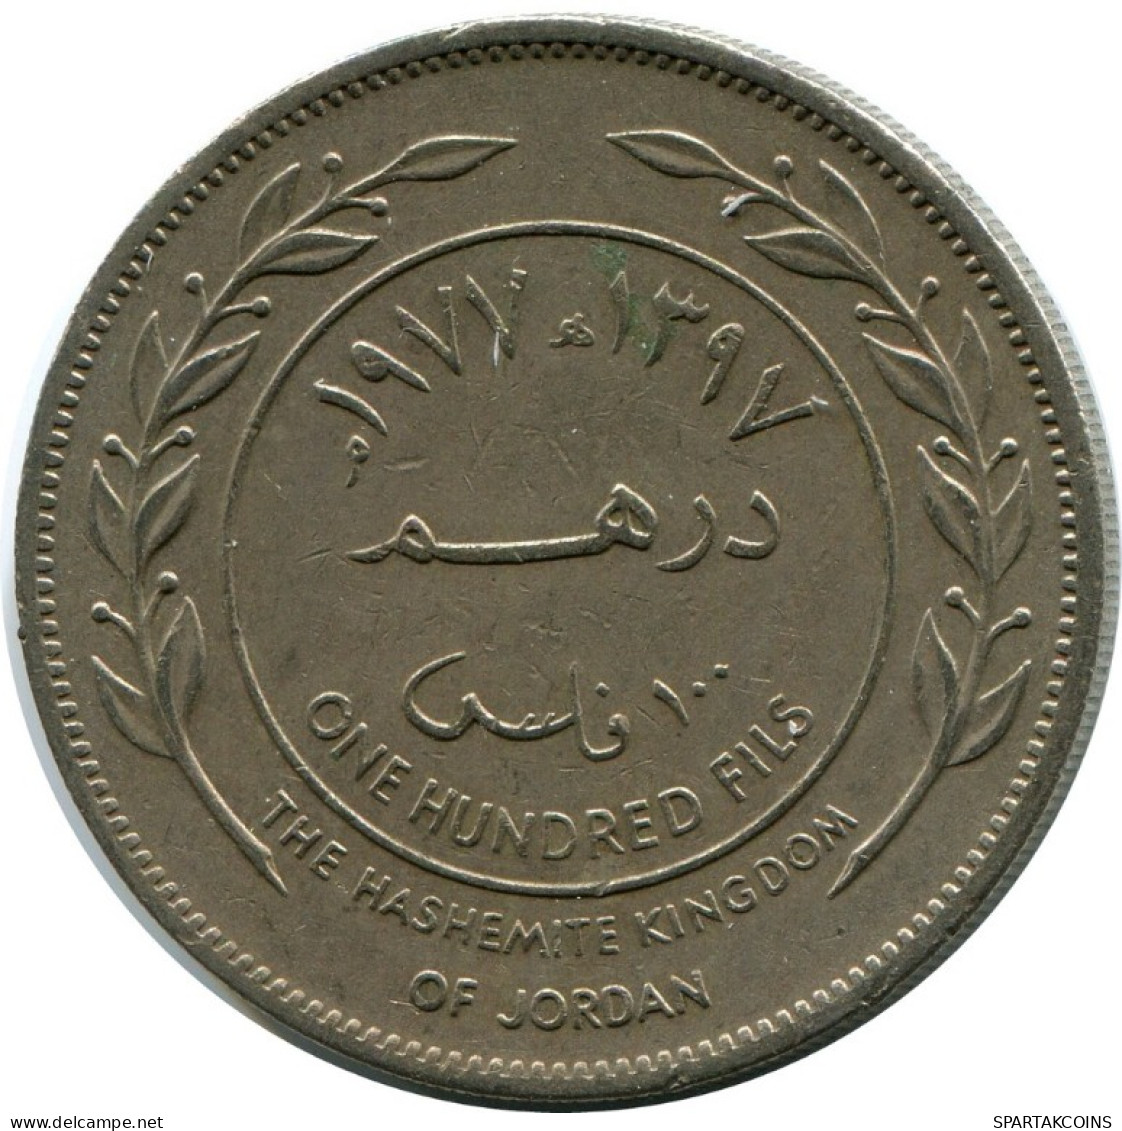 100 FILS 1977 JORDAN Islamic Coin #AK143.U.A - Jordanien